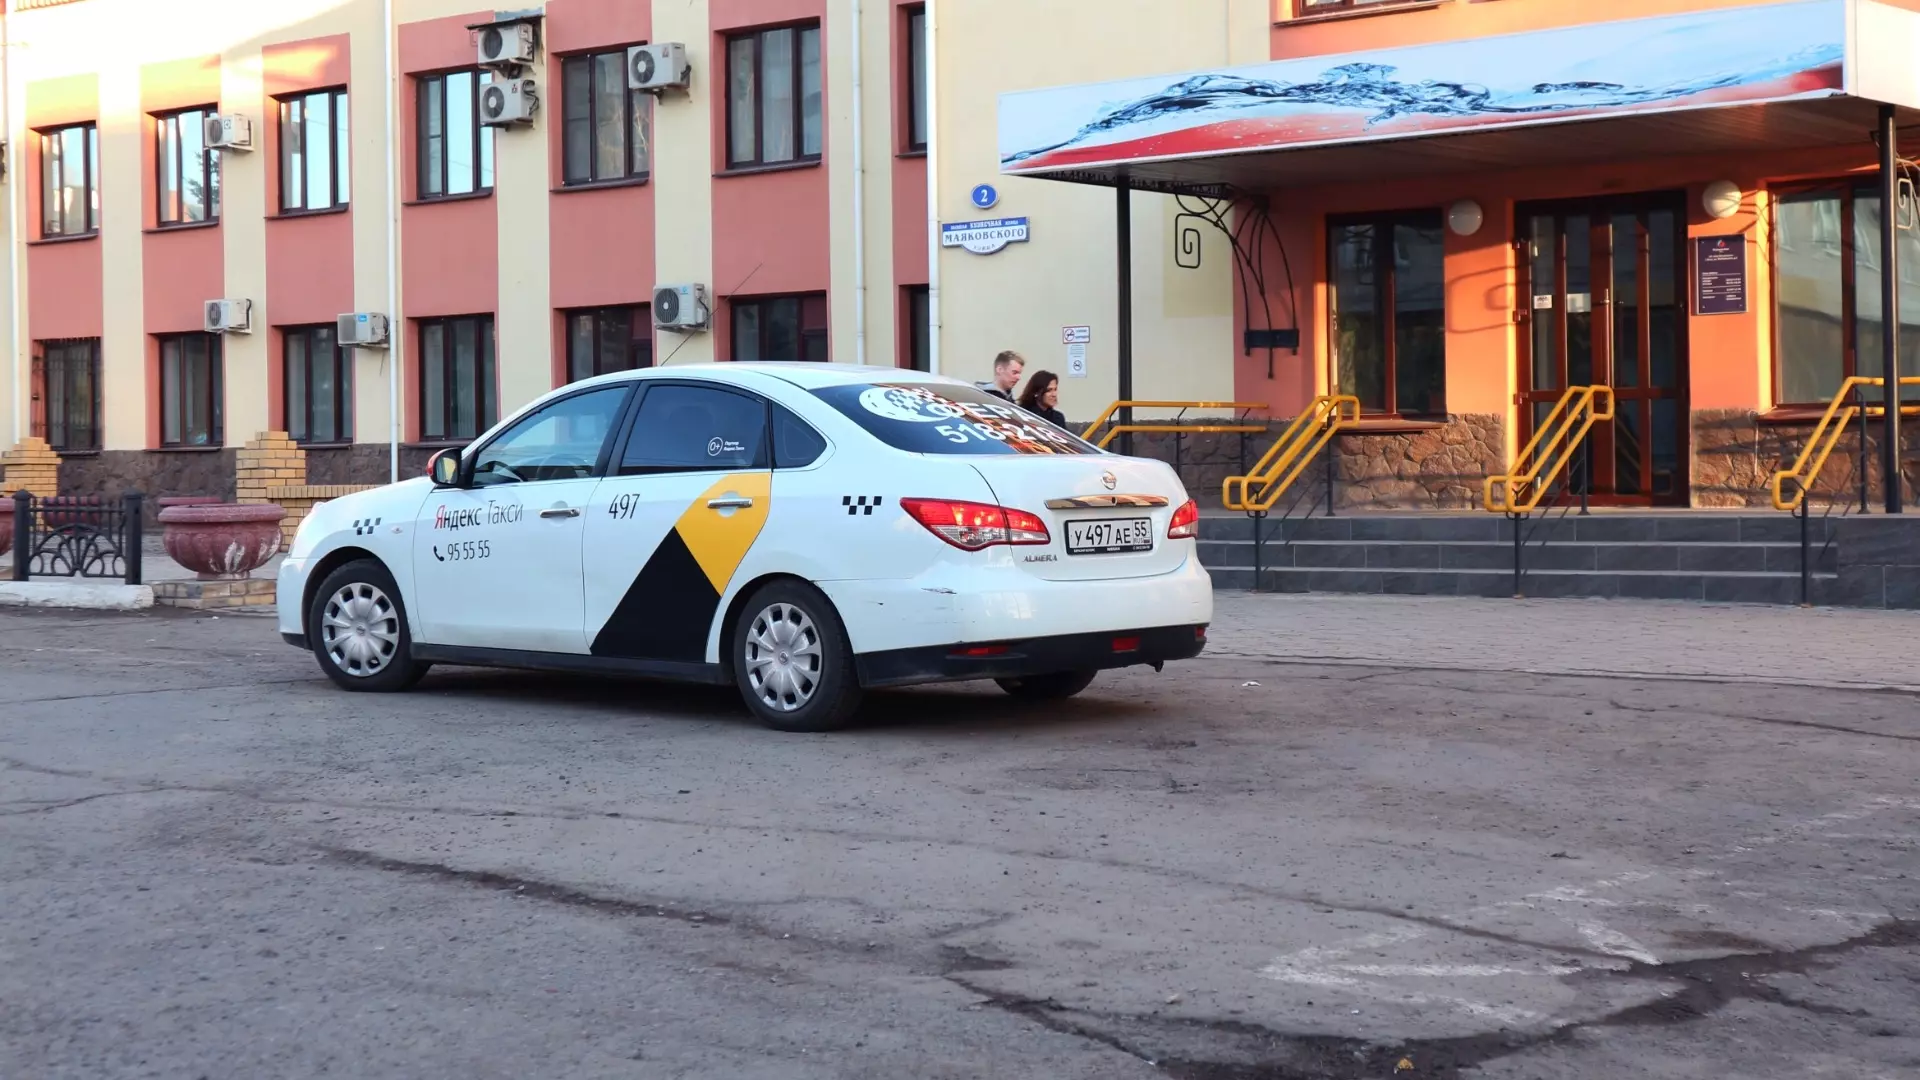 Агрегатор такси назвал «драматическим» рост цен на обслуживание авто в Ростове